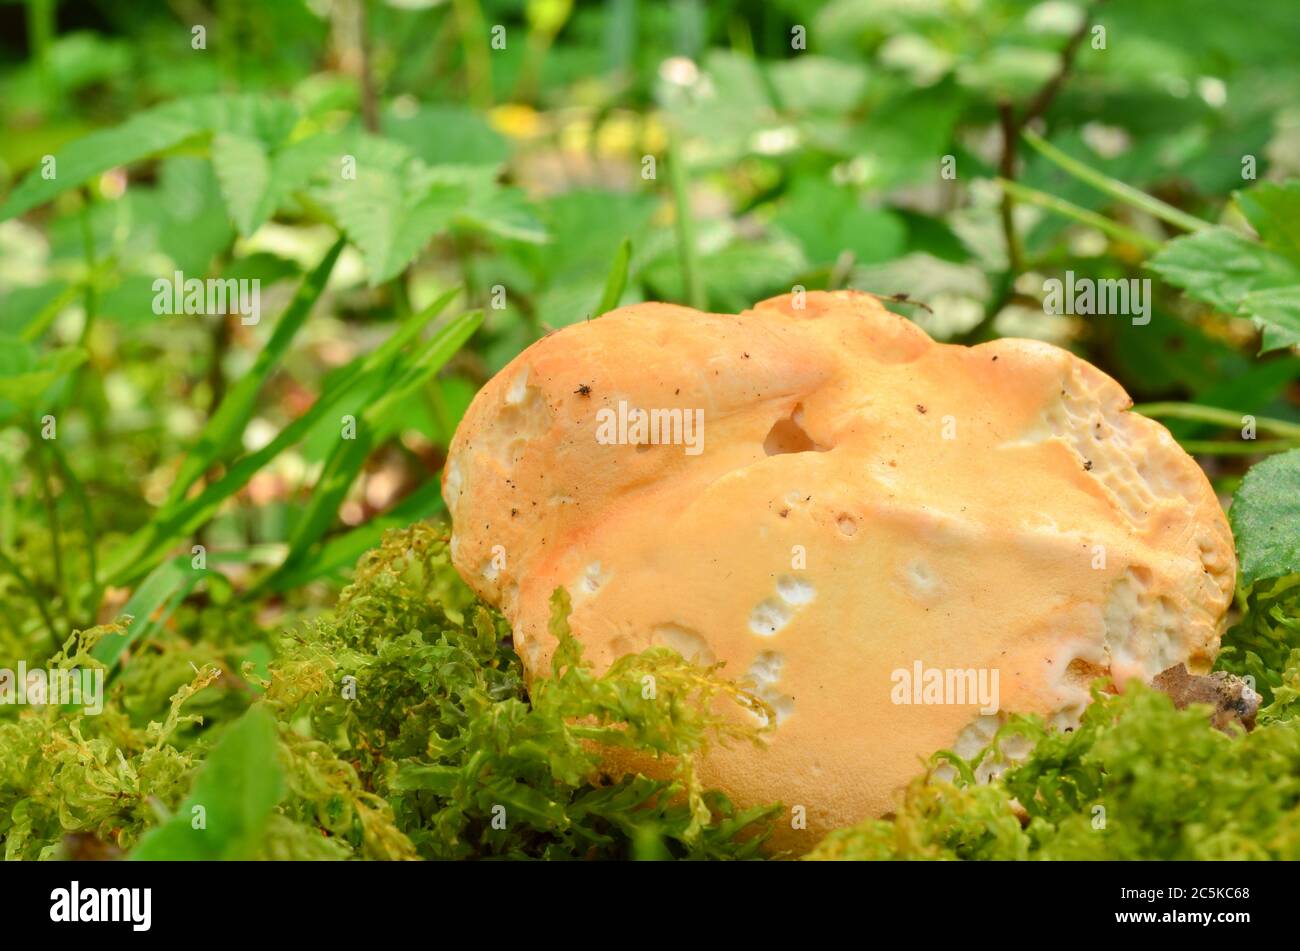 Wood Hedgehog mushroom, or Hydnum repandum, delicious edible mushroom in natural habitat, view from above Stock Photo